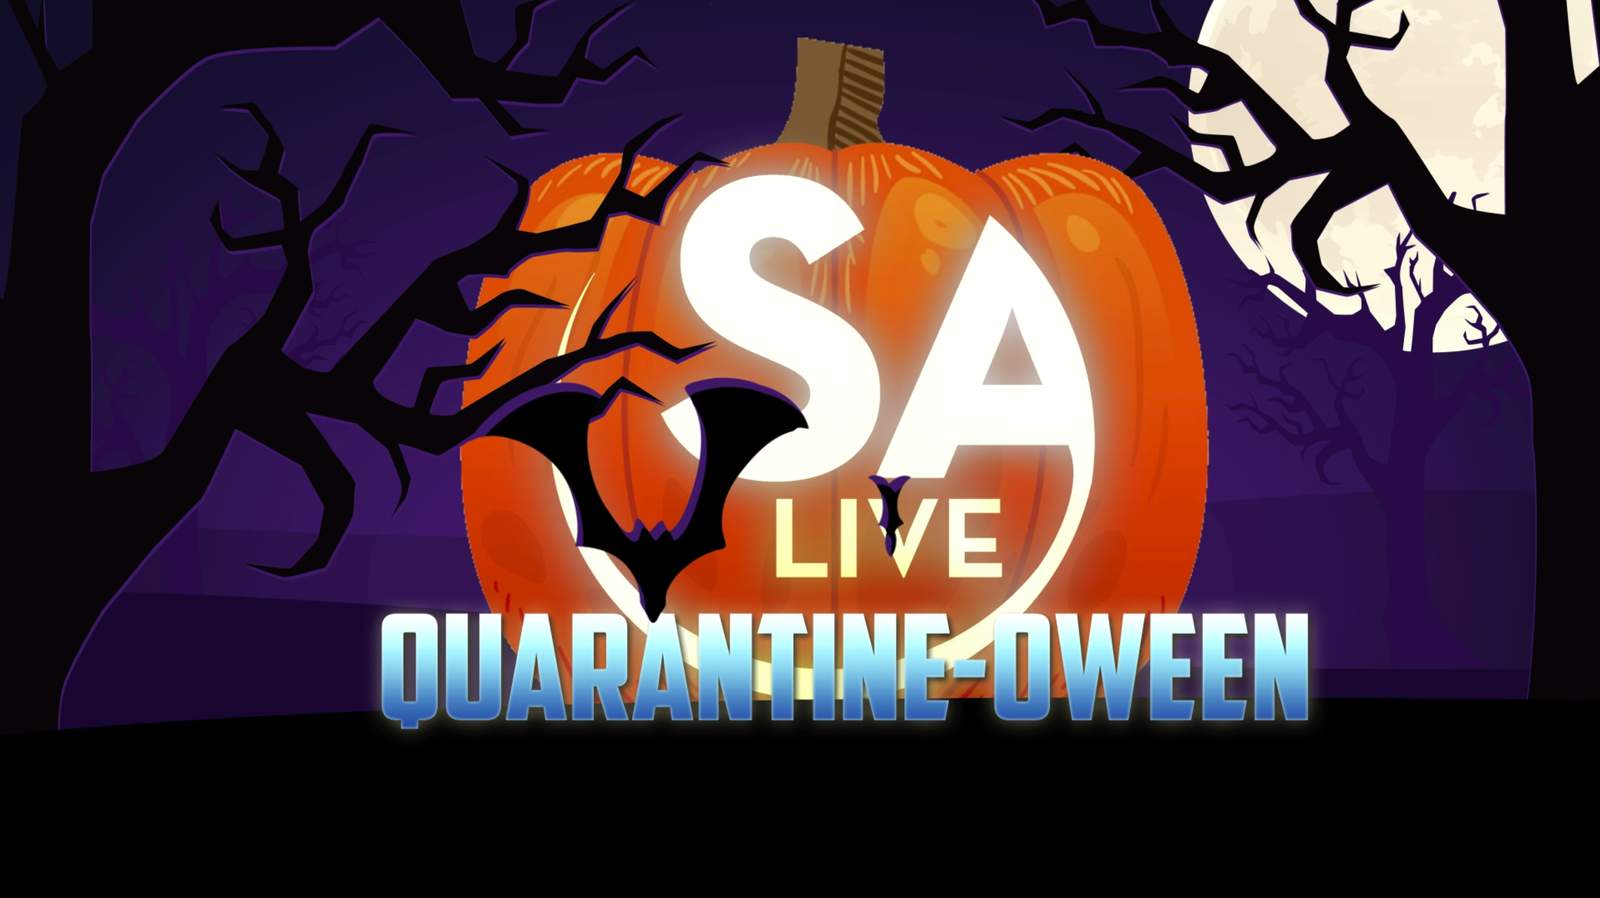 As seen on SA Live - Quarantine-oween! - Friday, October 30, 2020